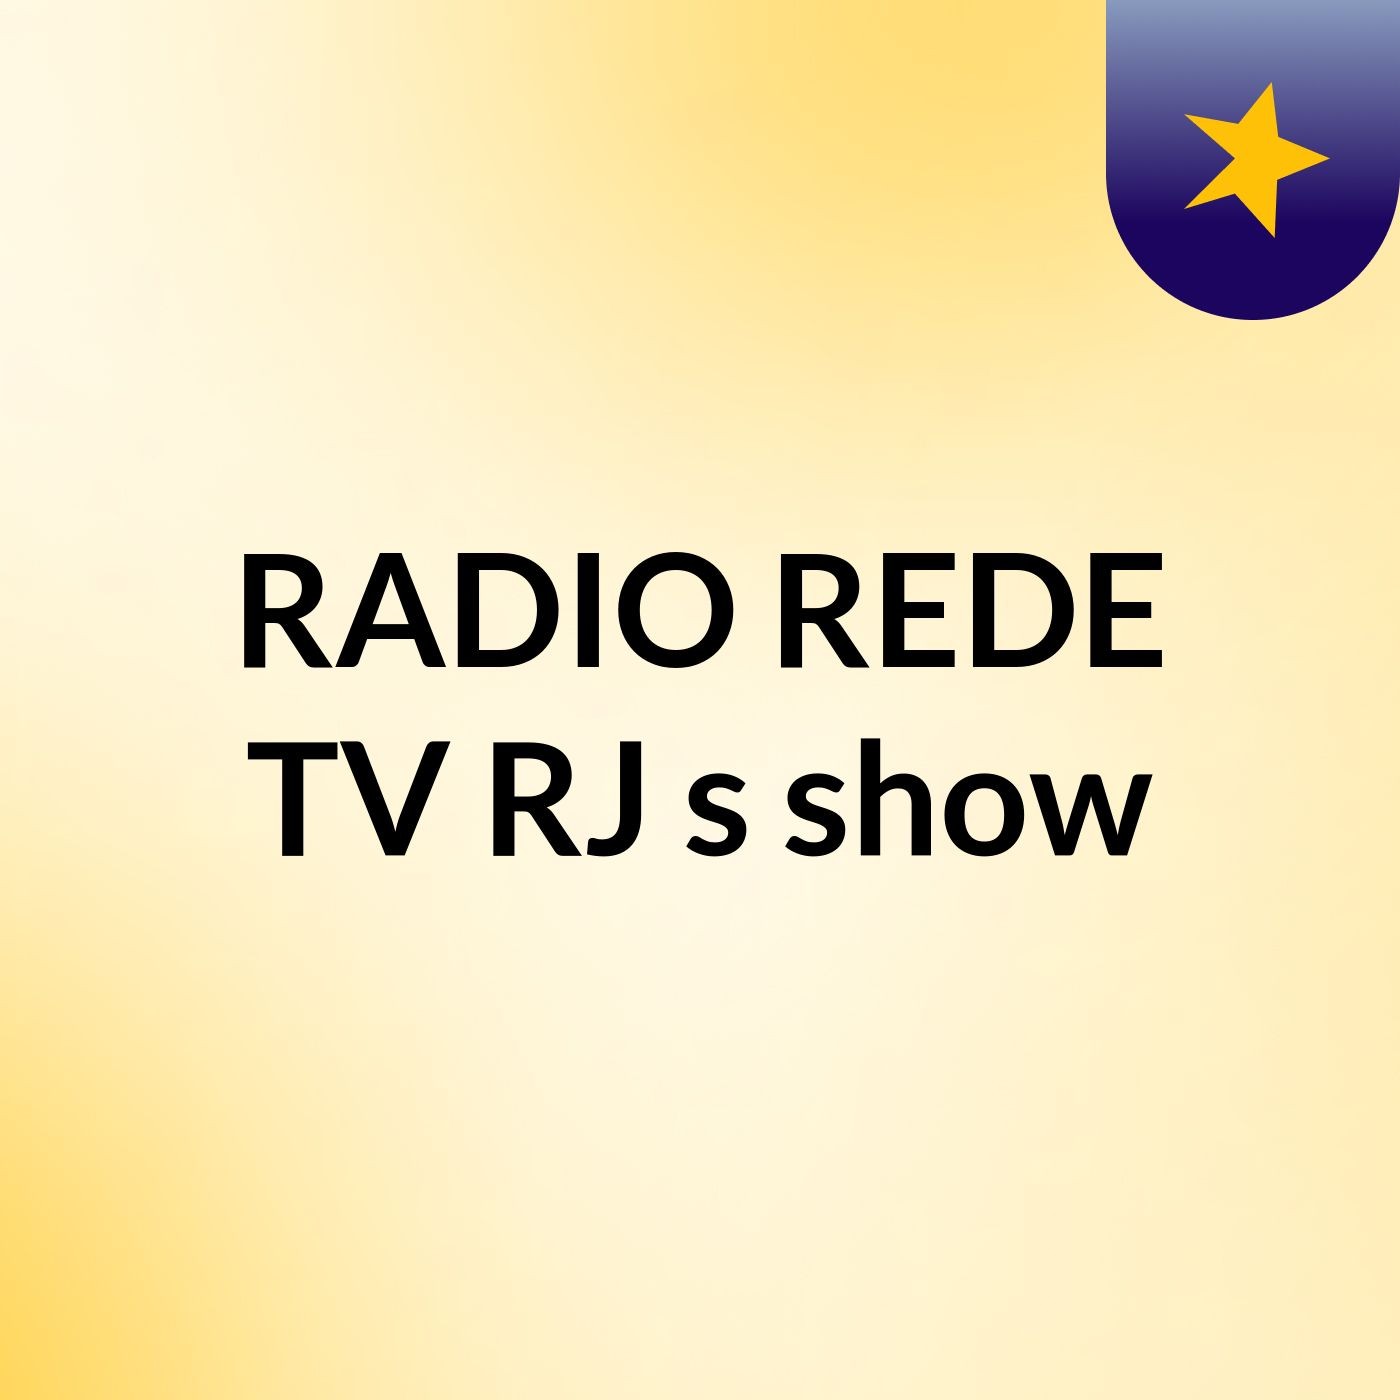 RADIO REDE TV RJ's show